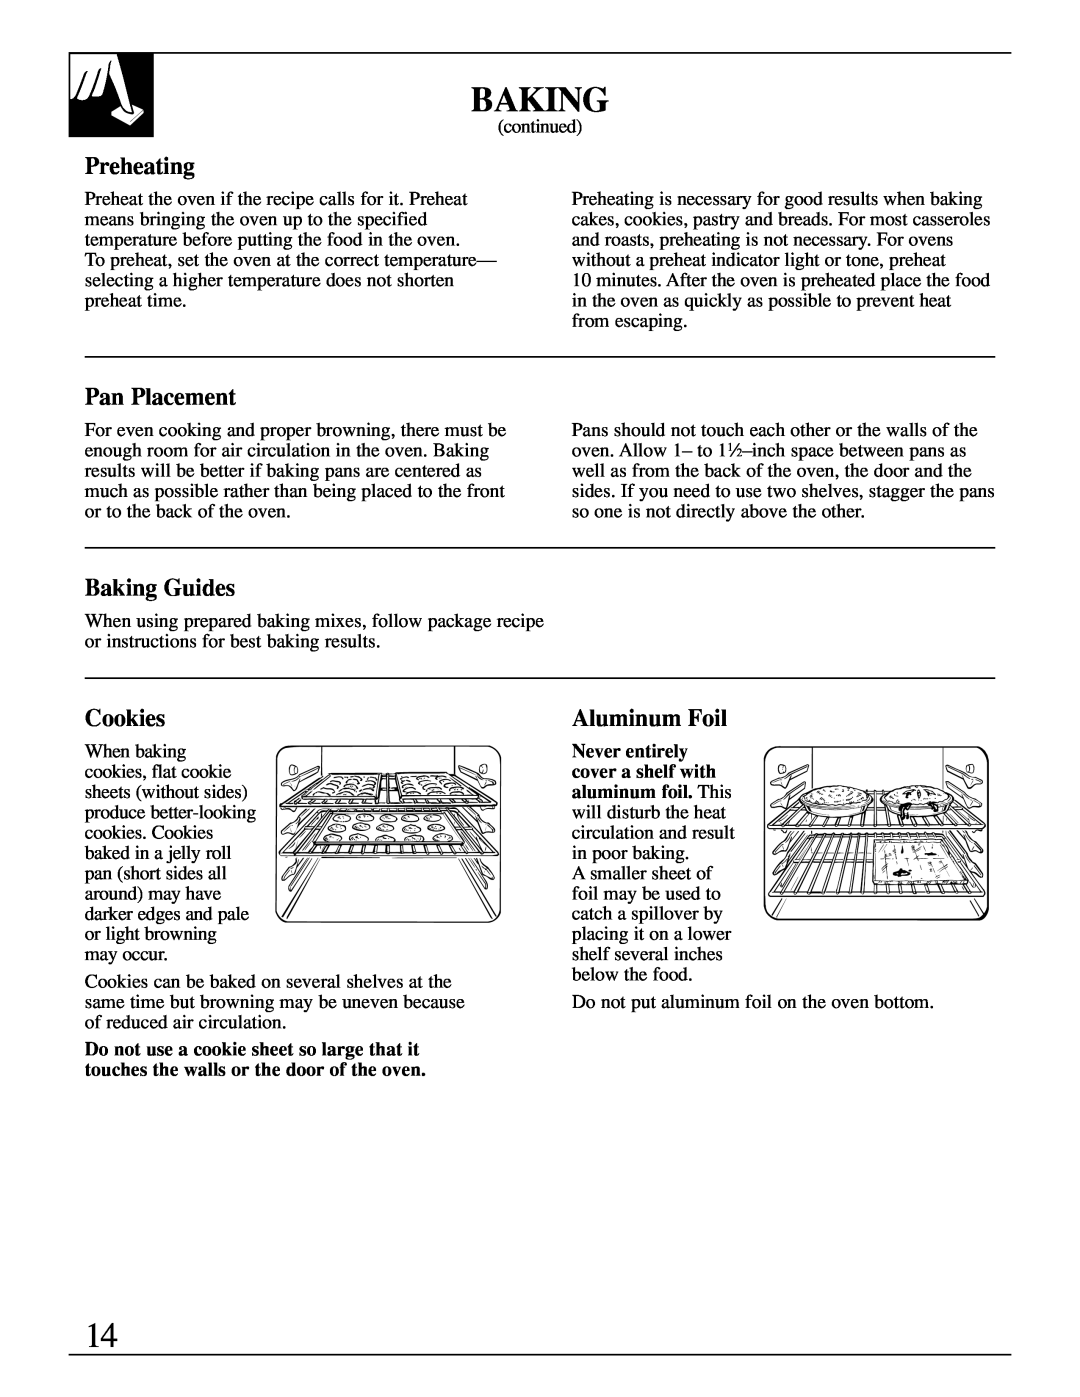 GE XL44 manual Preheating, Pan Placement, Baking Guides, Cookies, Aluminum Foil 